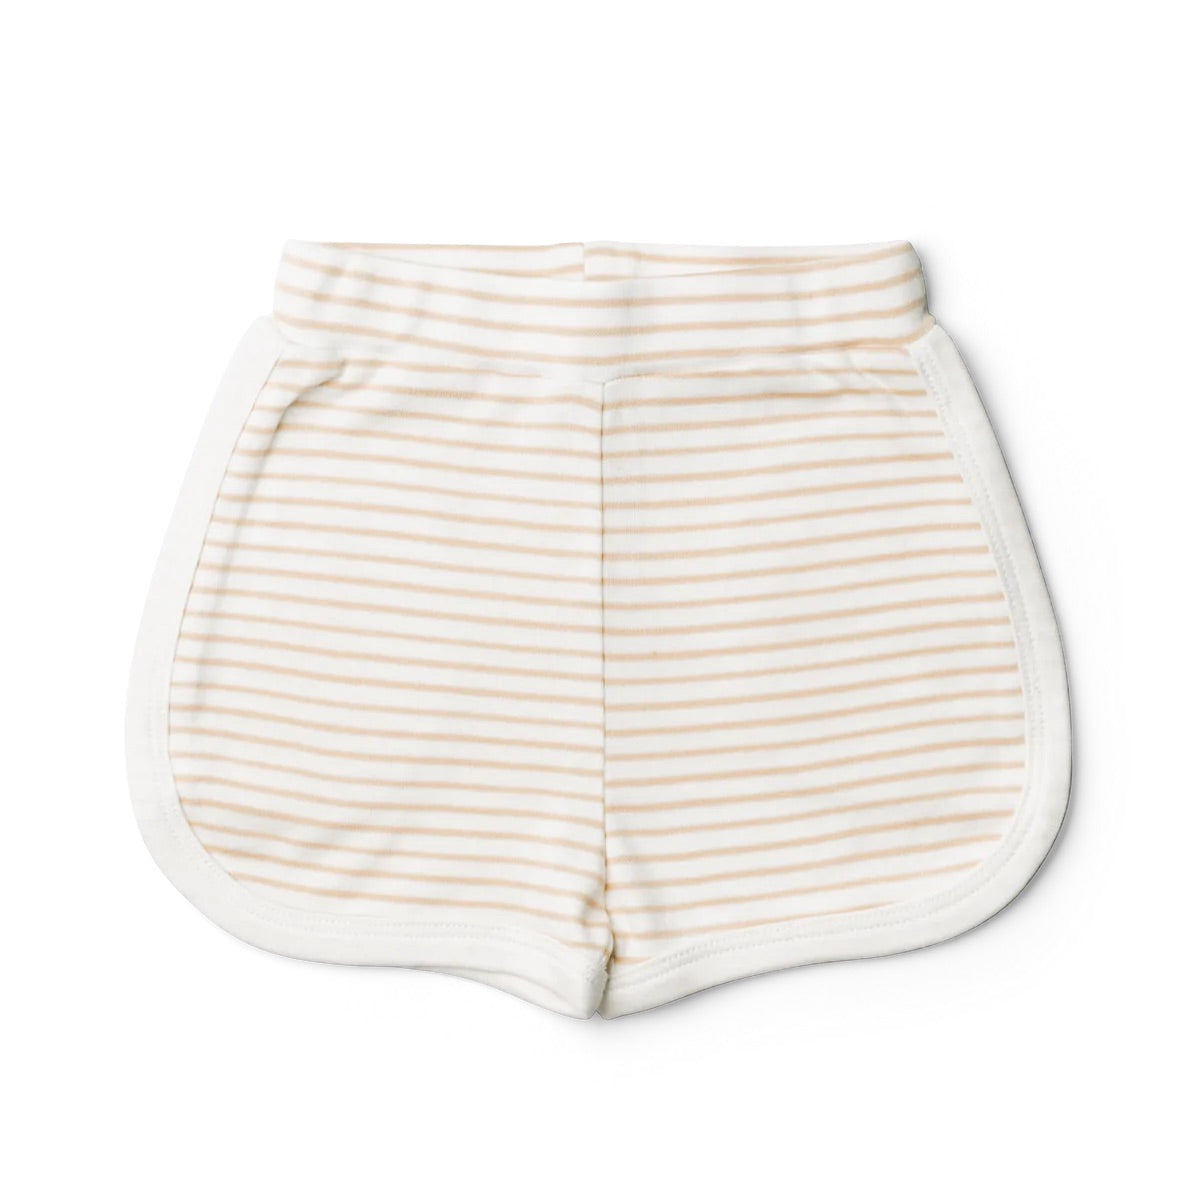 Goumikids Shorts - Dune Stripe